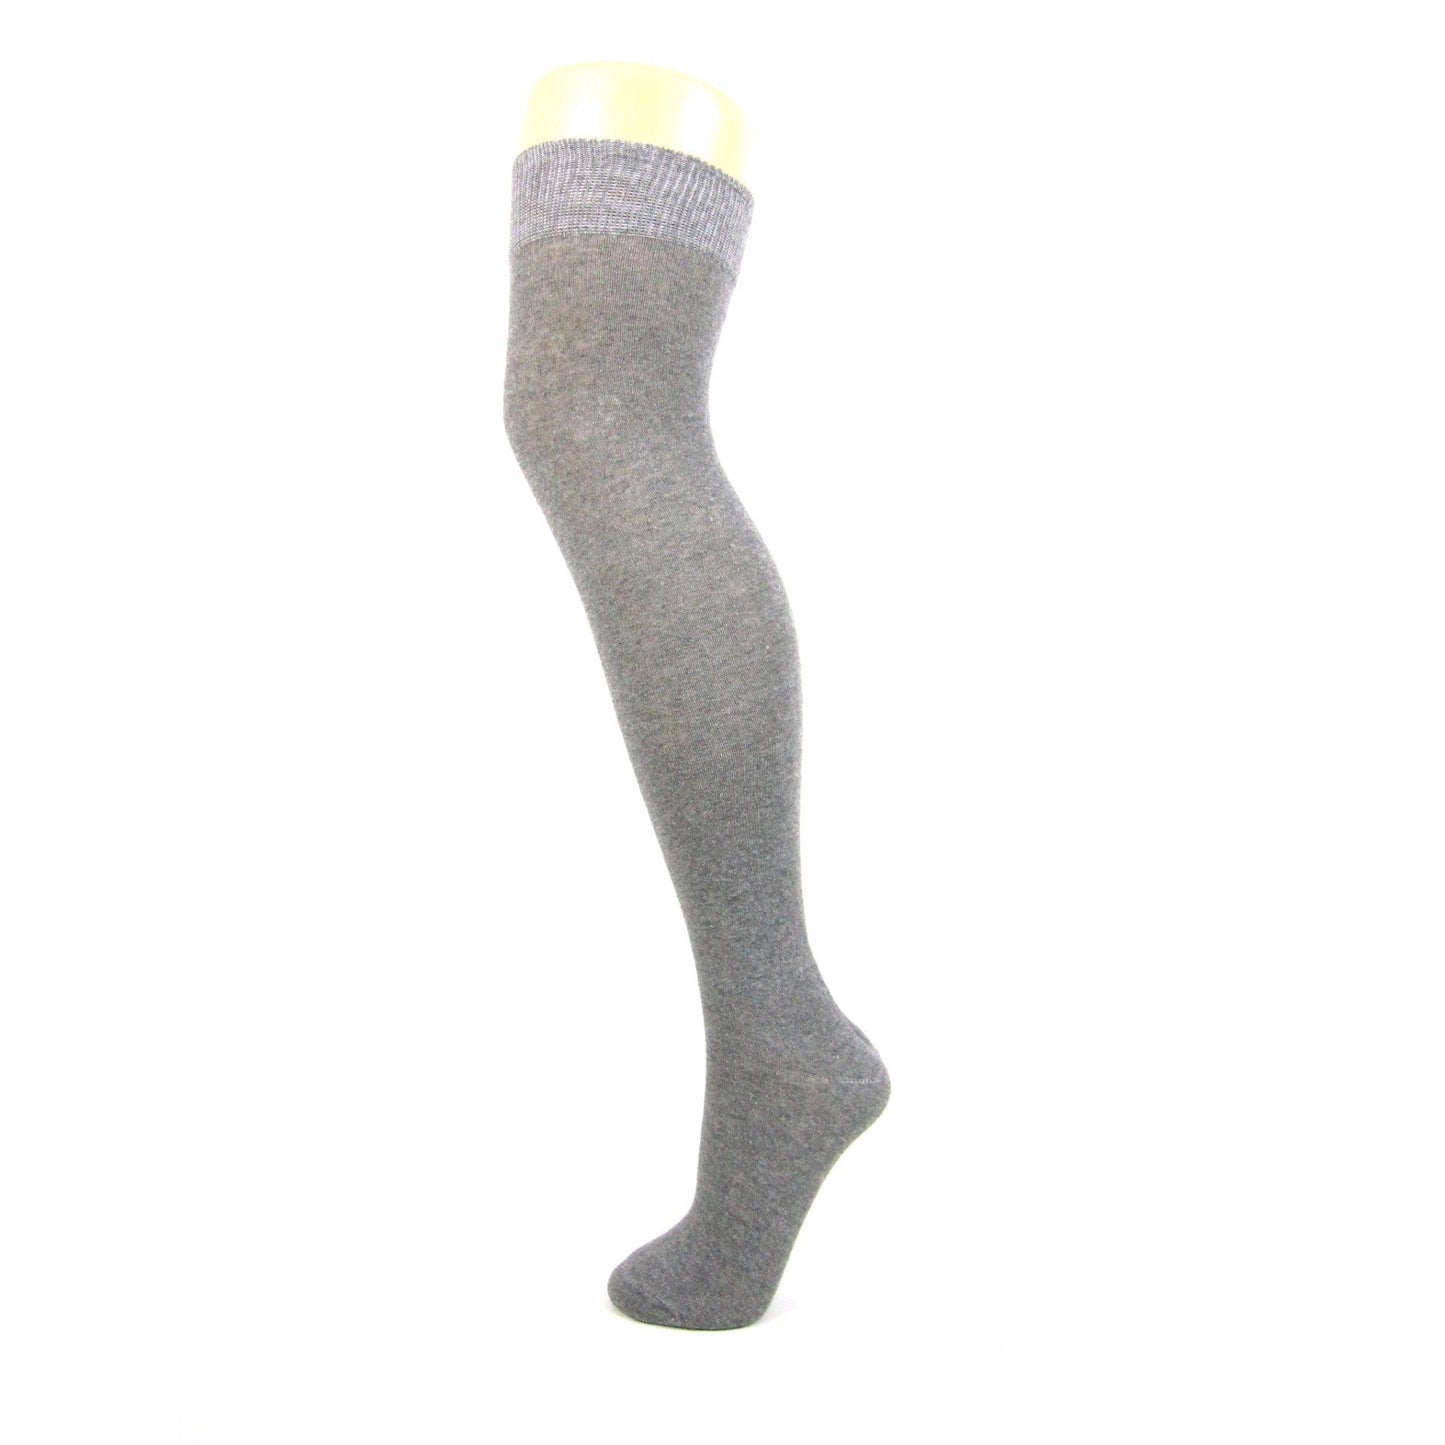 Plain Cotton Blend Over The Knee Socks - Leggsbeautiful